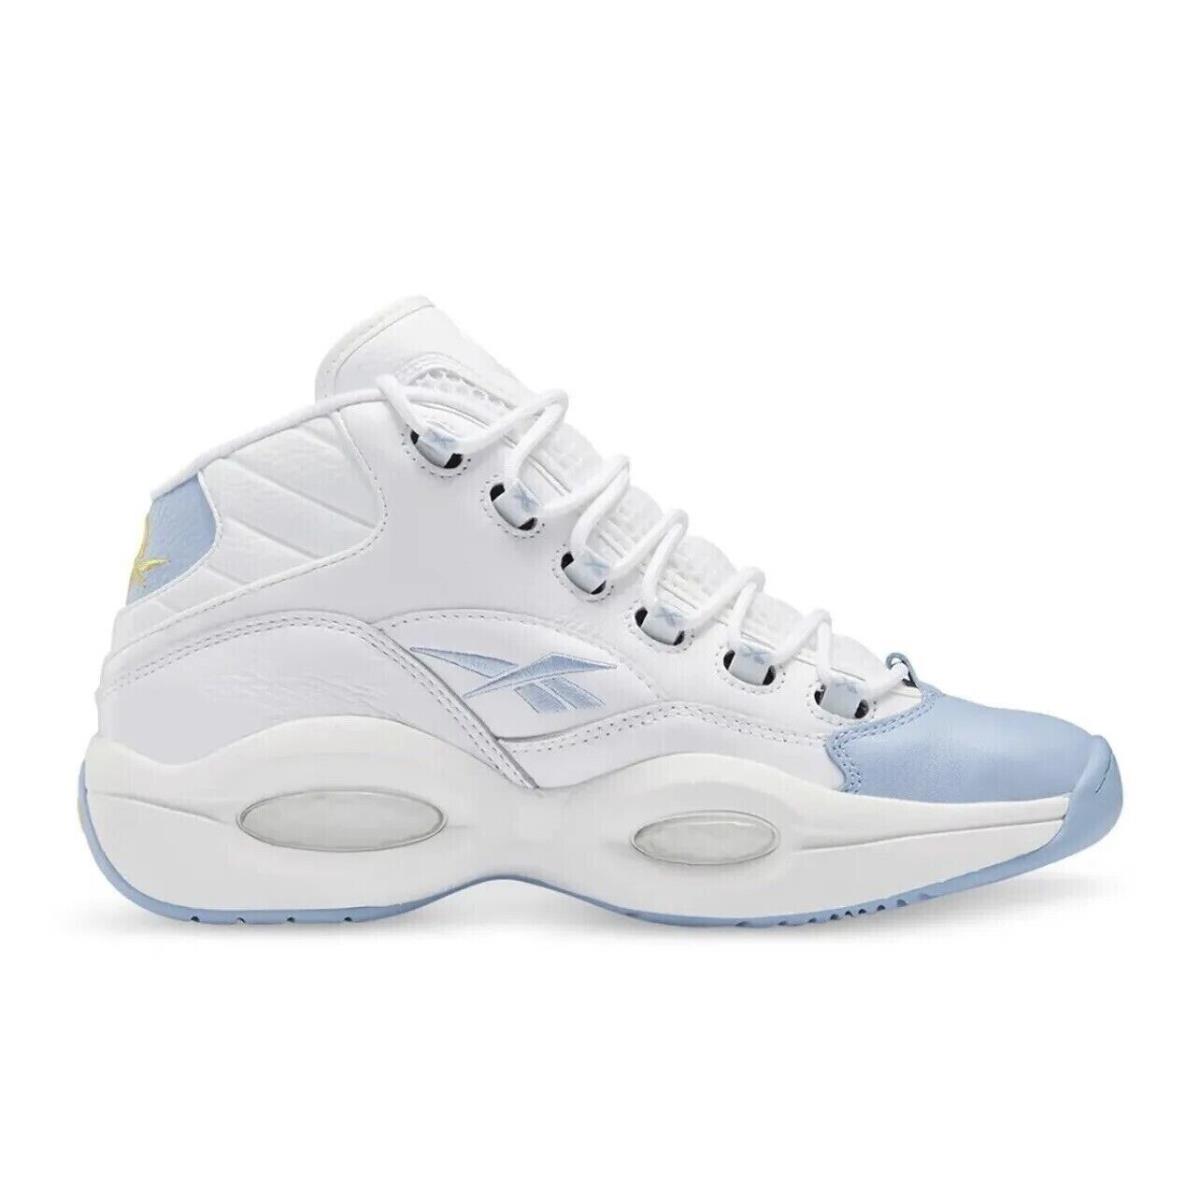 Reebok Mens Question Mid Basketball Shoes GW8854 - WHITE/FLUBLU/TOXYEL